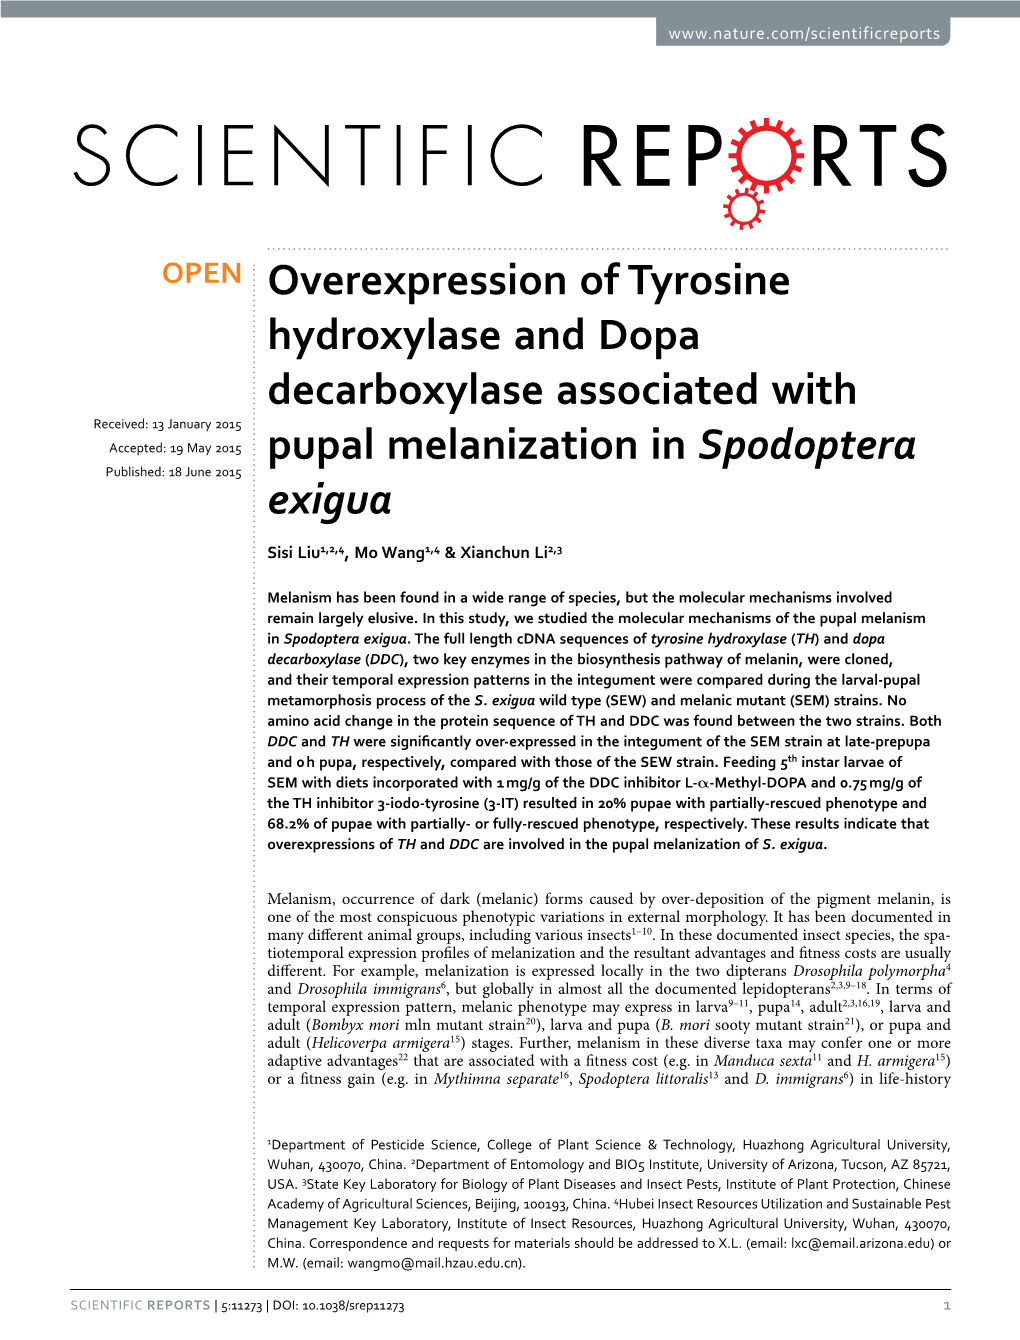 Overexpression of Tyrosine Hydroxylase and Dopa